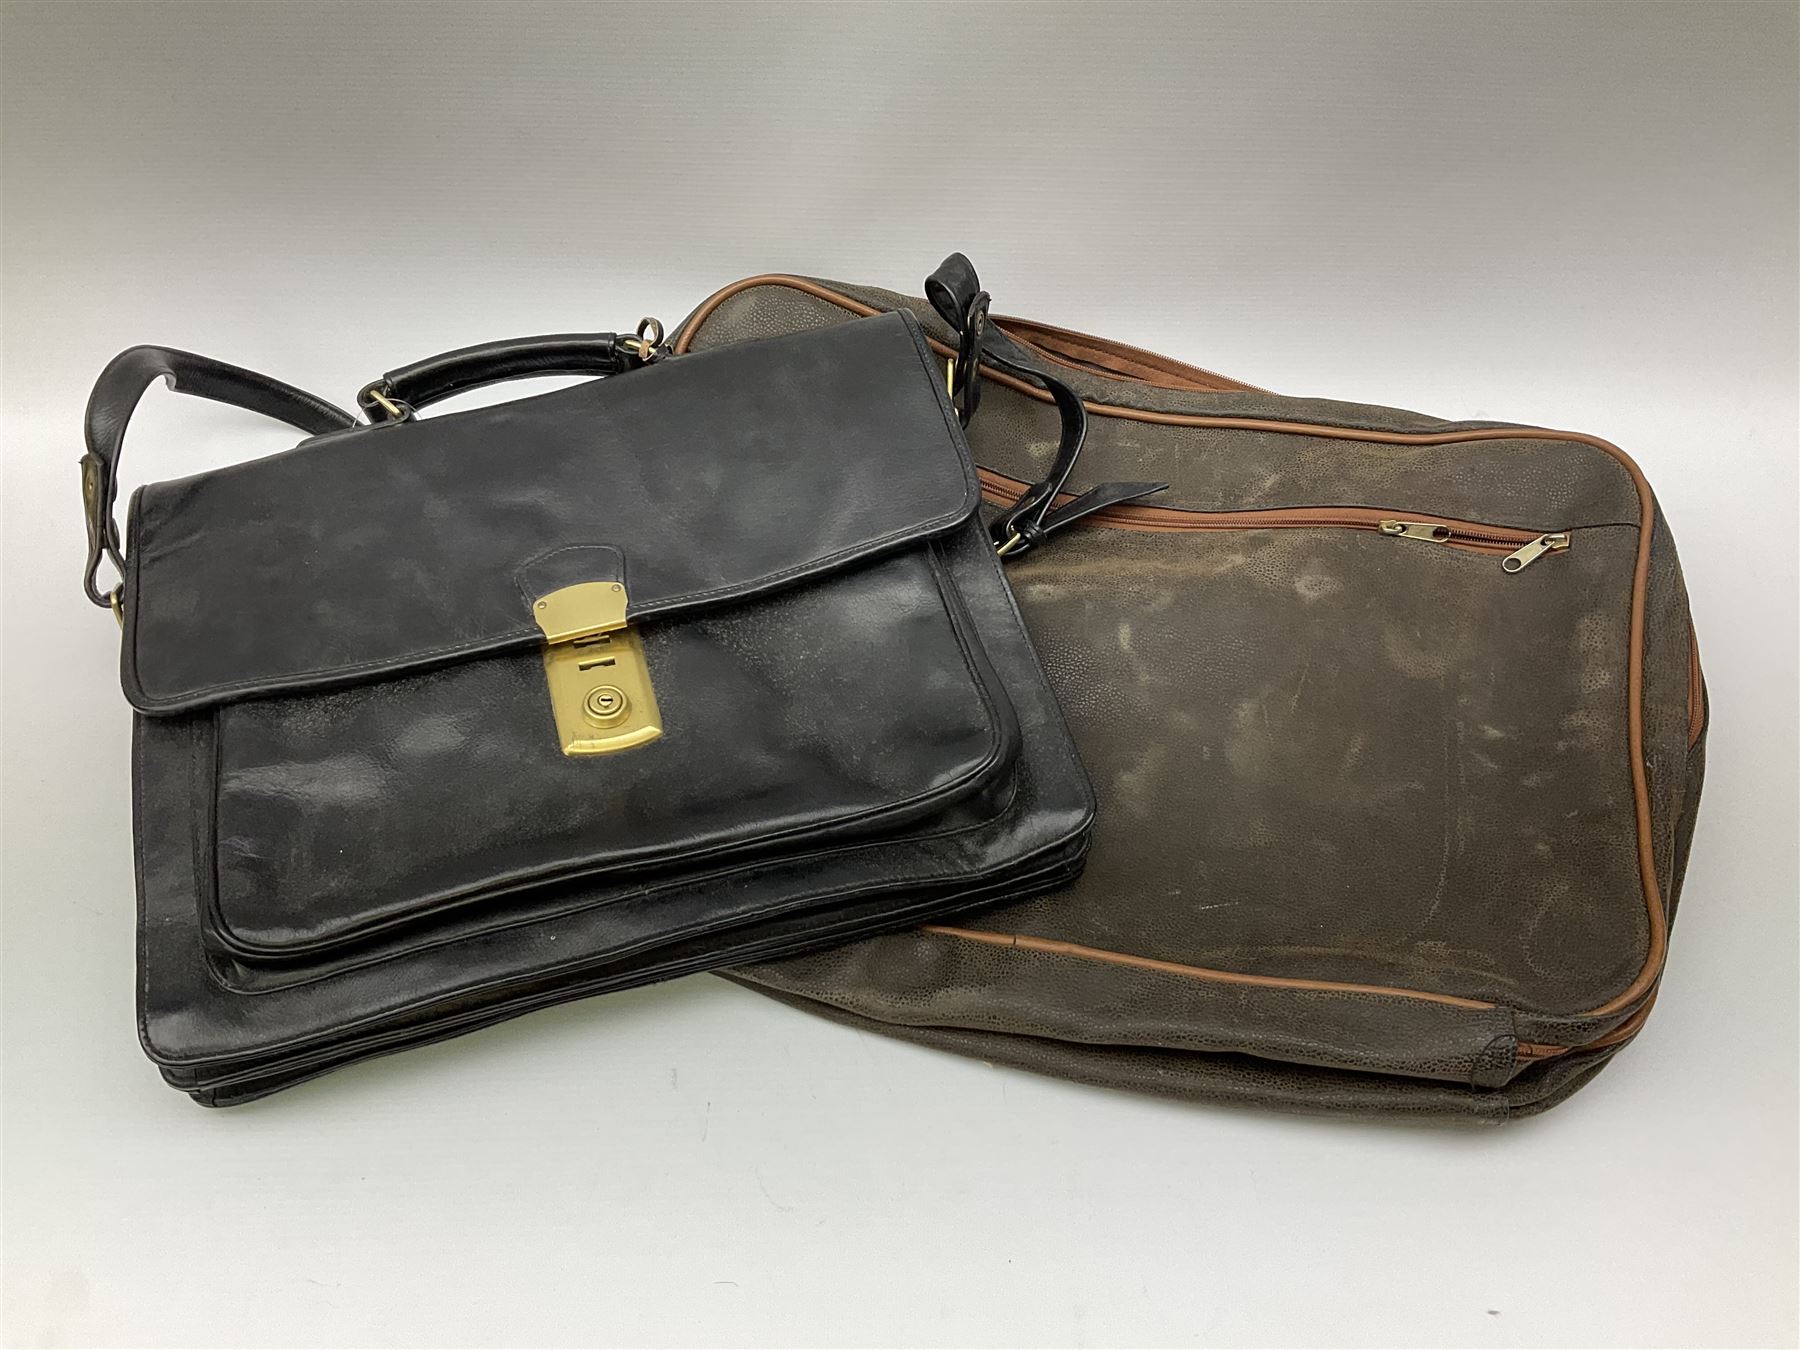 Handbags including Burberrys - Image 7 of 8